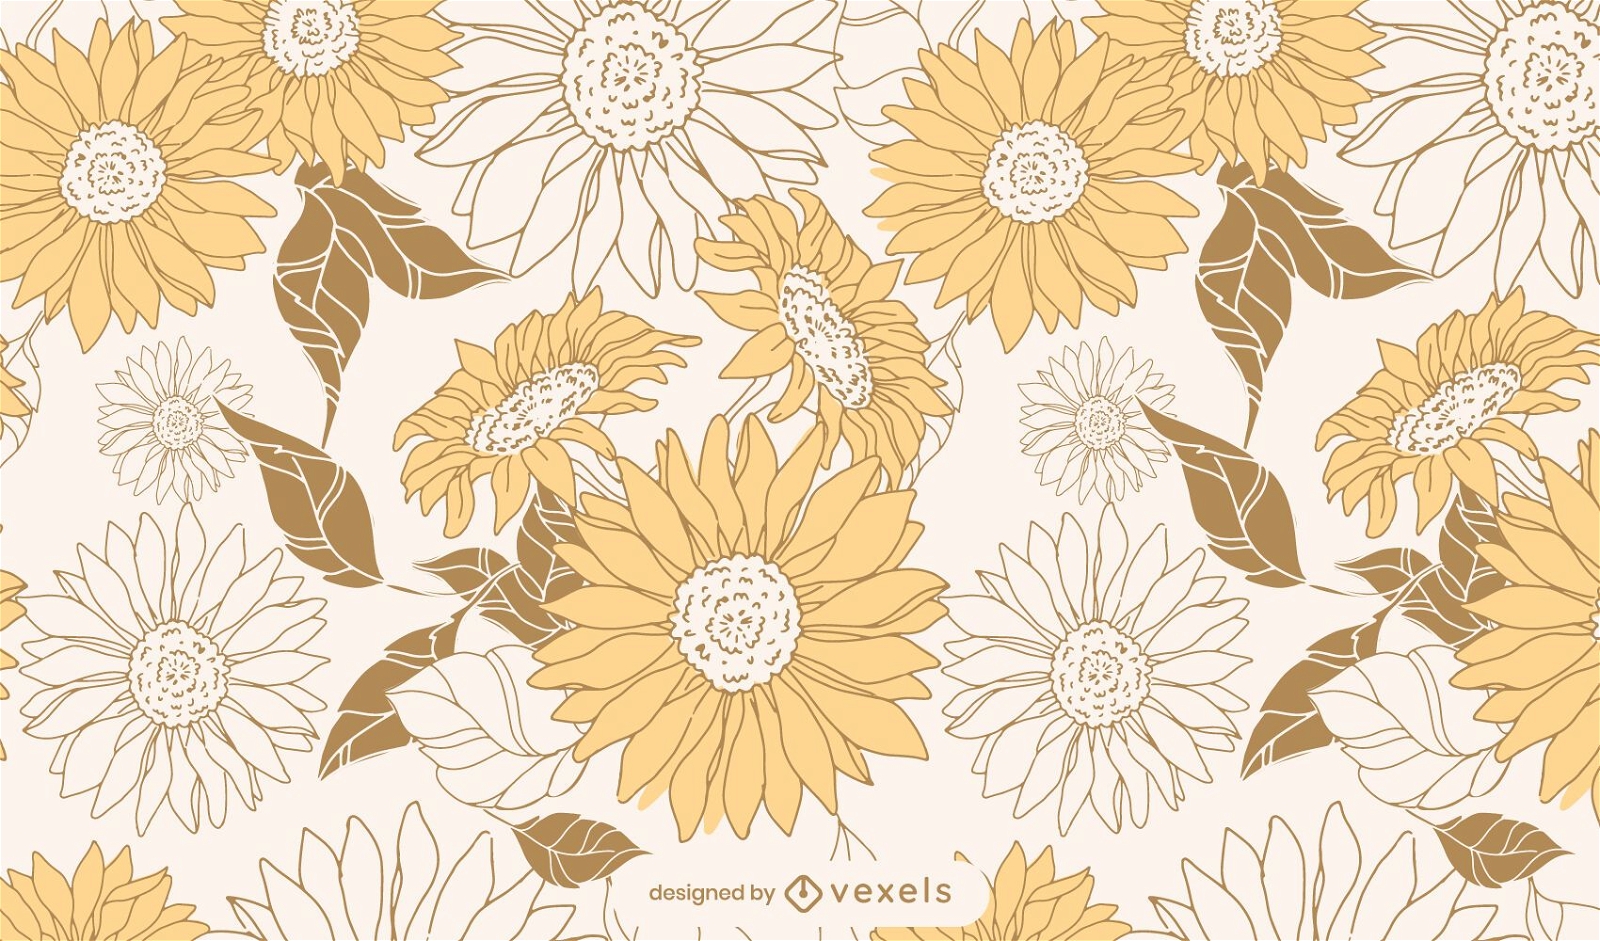 Sunflowers Floral Pattern Design Vector Download